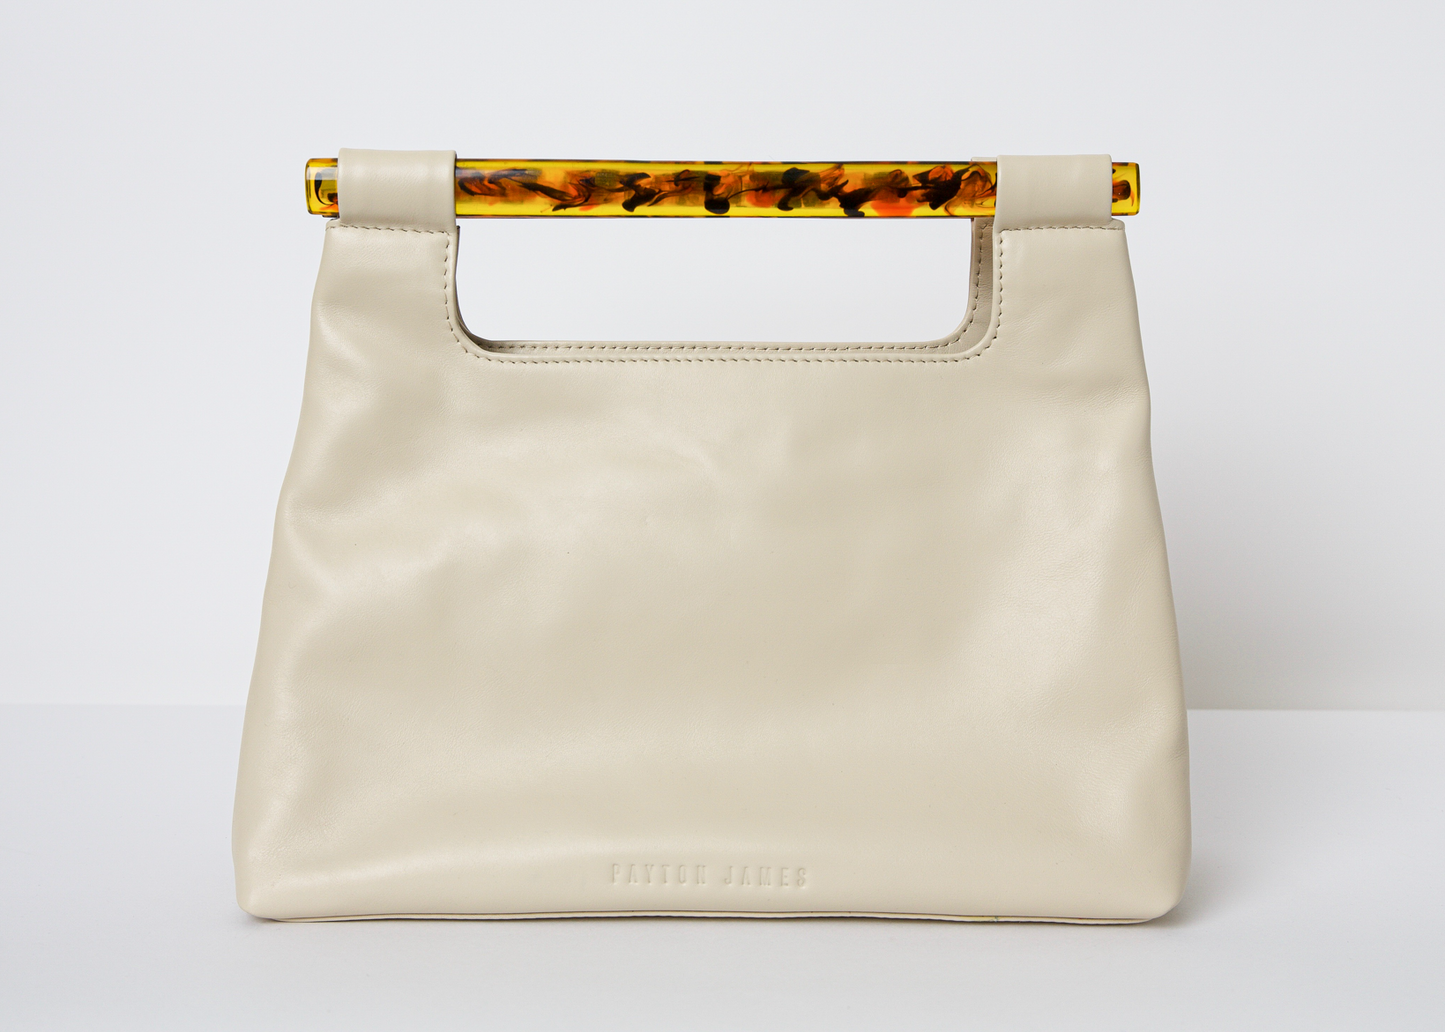 White nappa leather Eloise handbag / tote